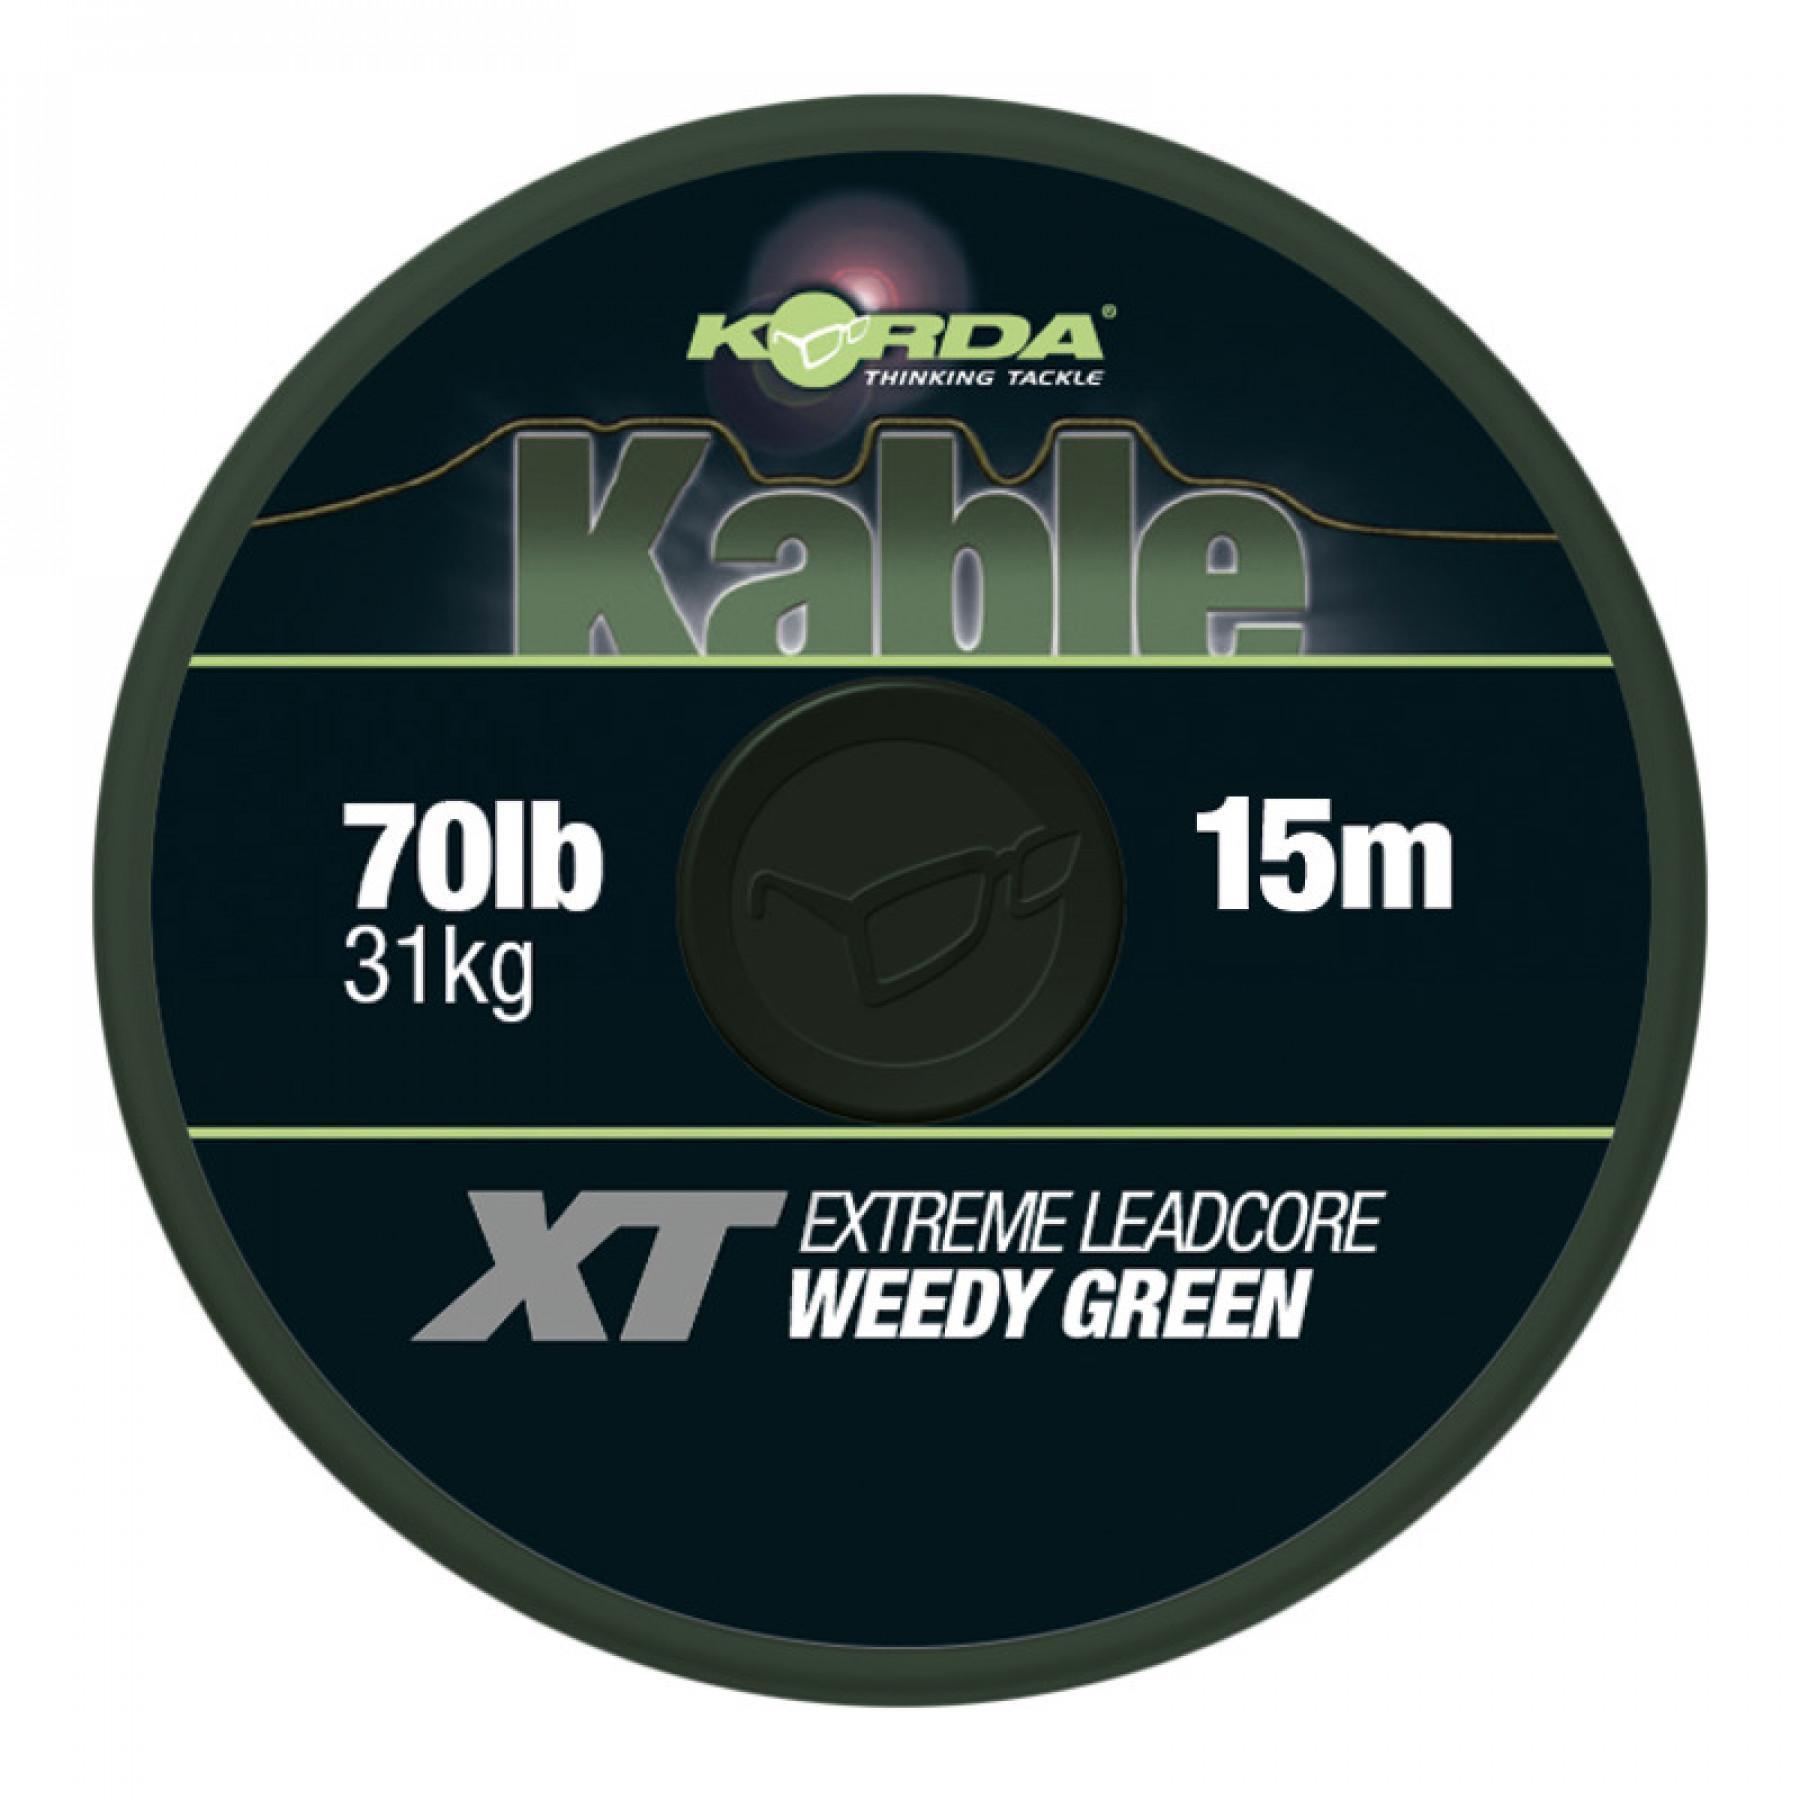 Kable XT Korda Extreme Leadcore Weedy Green